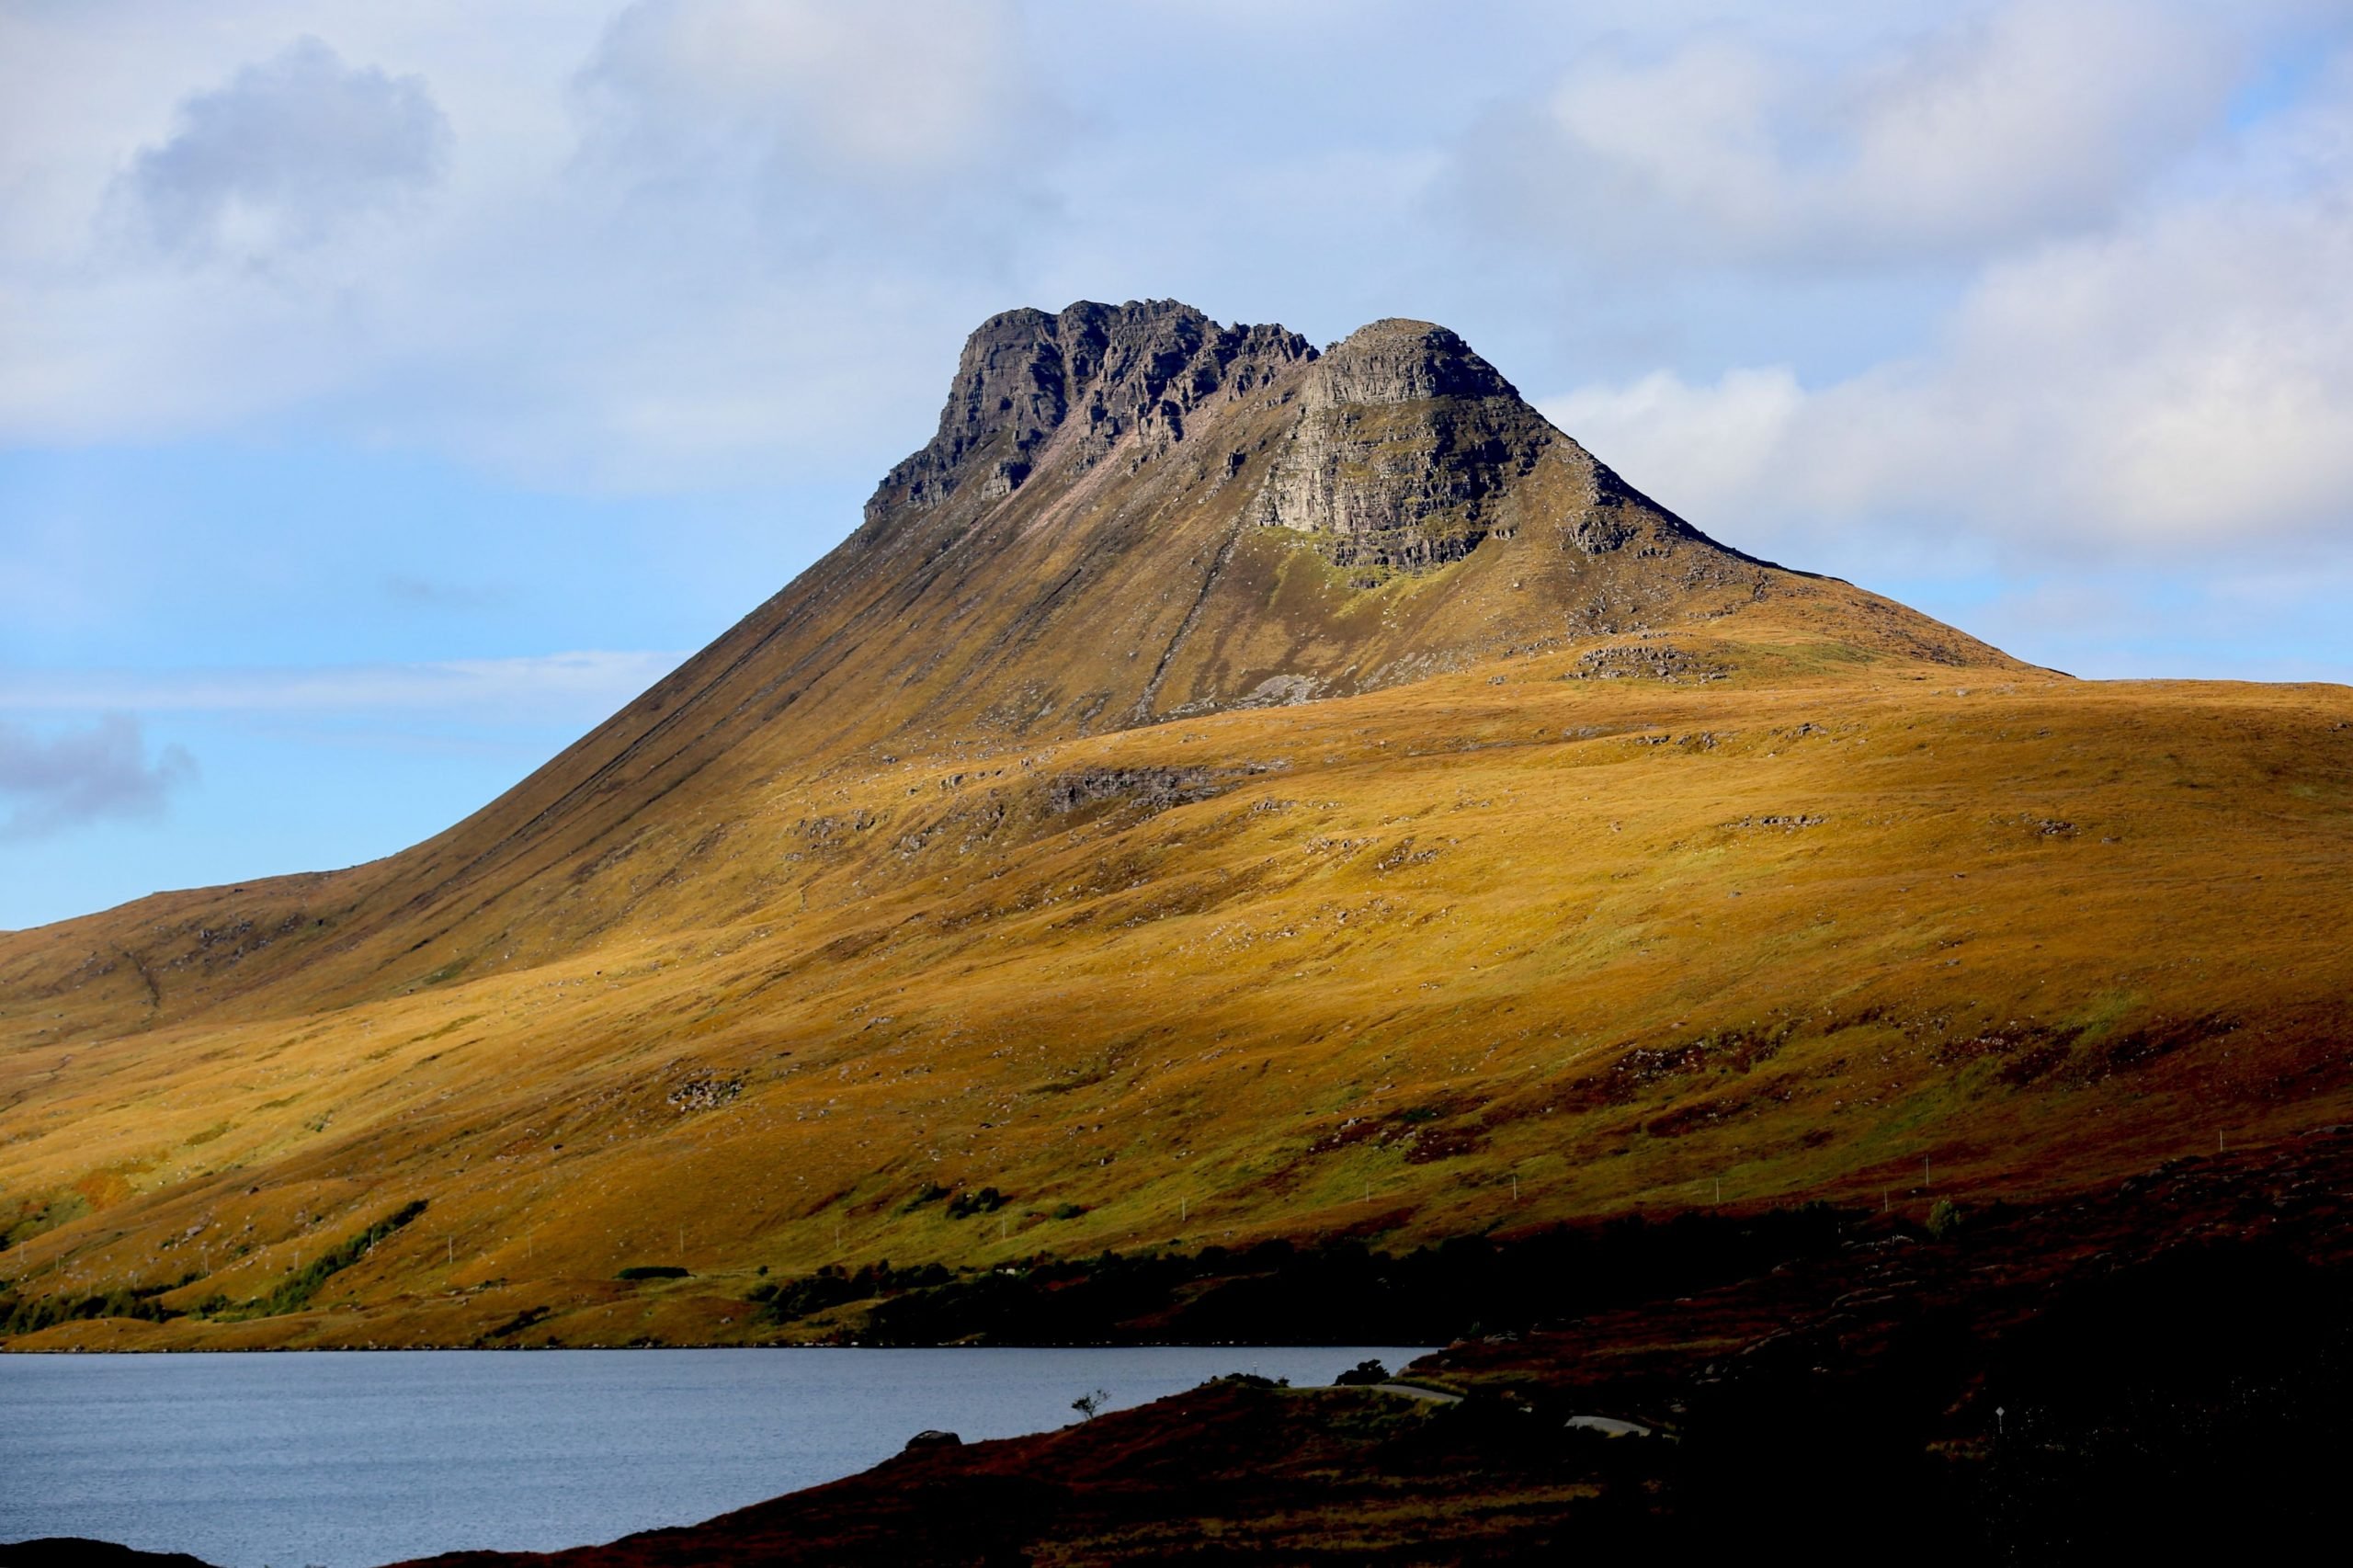 Stac Pollaidh, a mountain on the Northwest coast of Scotland.